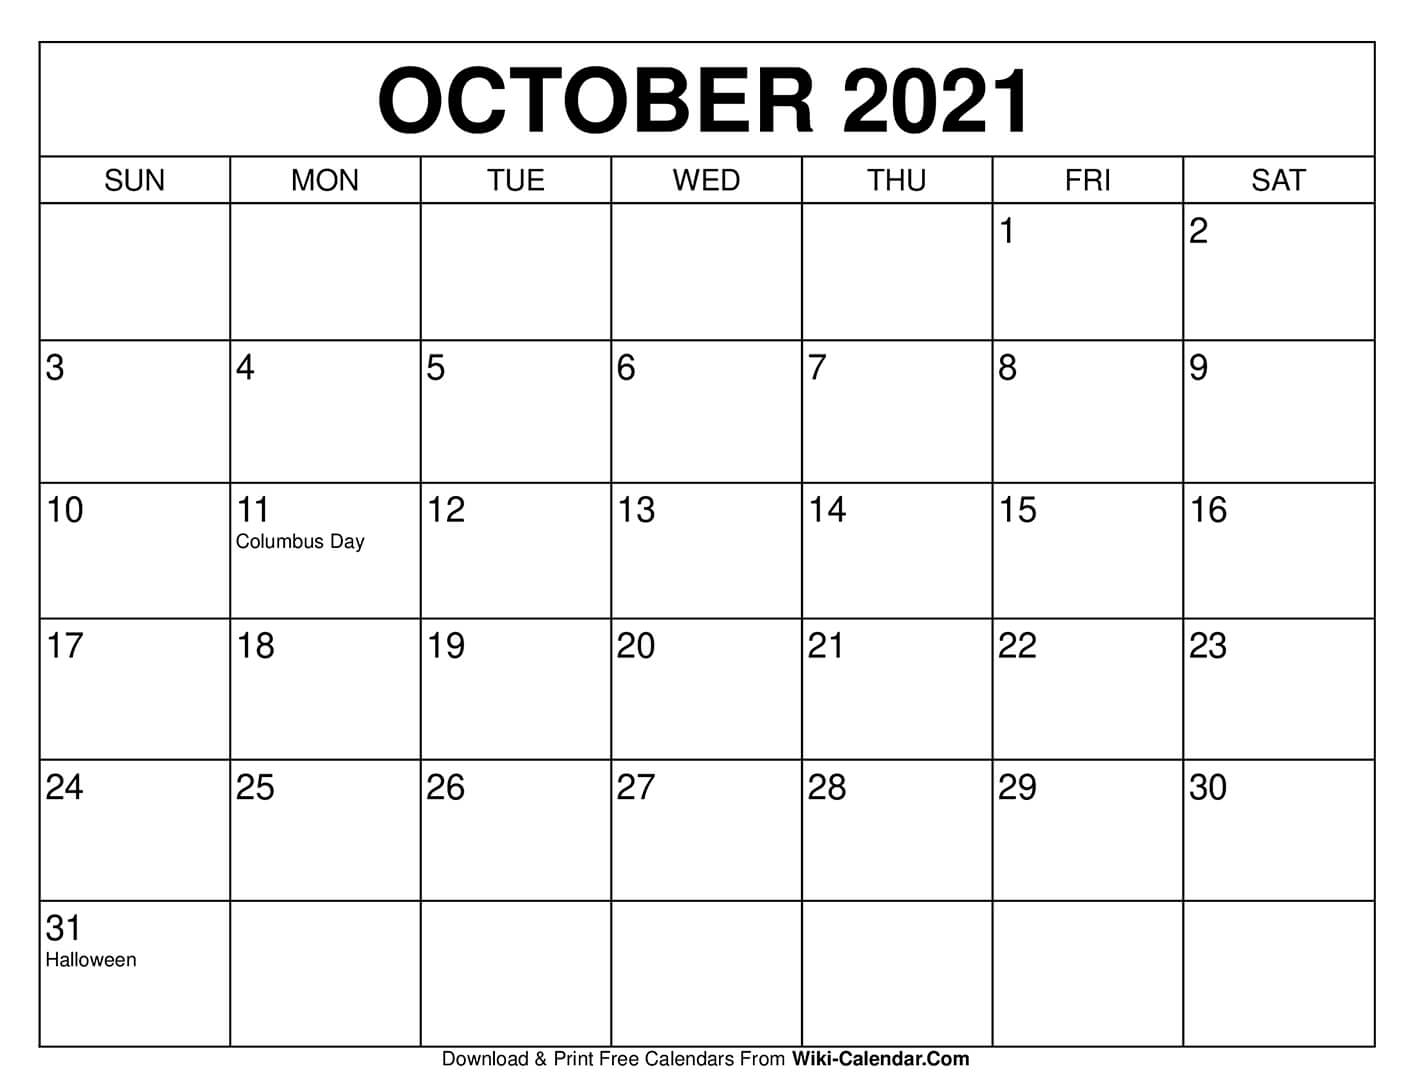 Collect May 2022 Printable Calendar Wiki